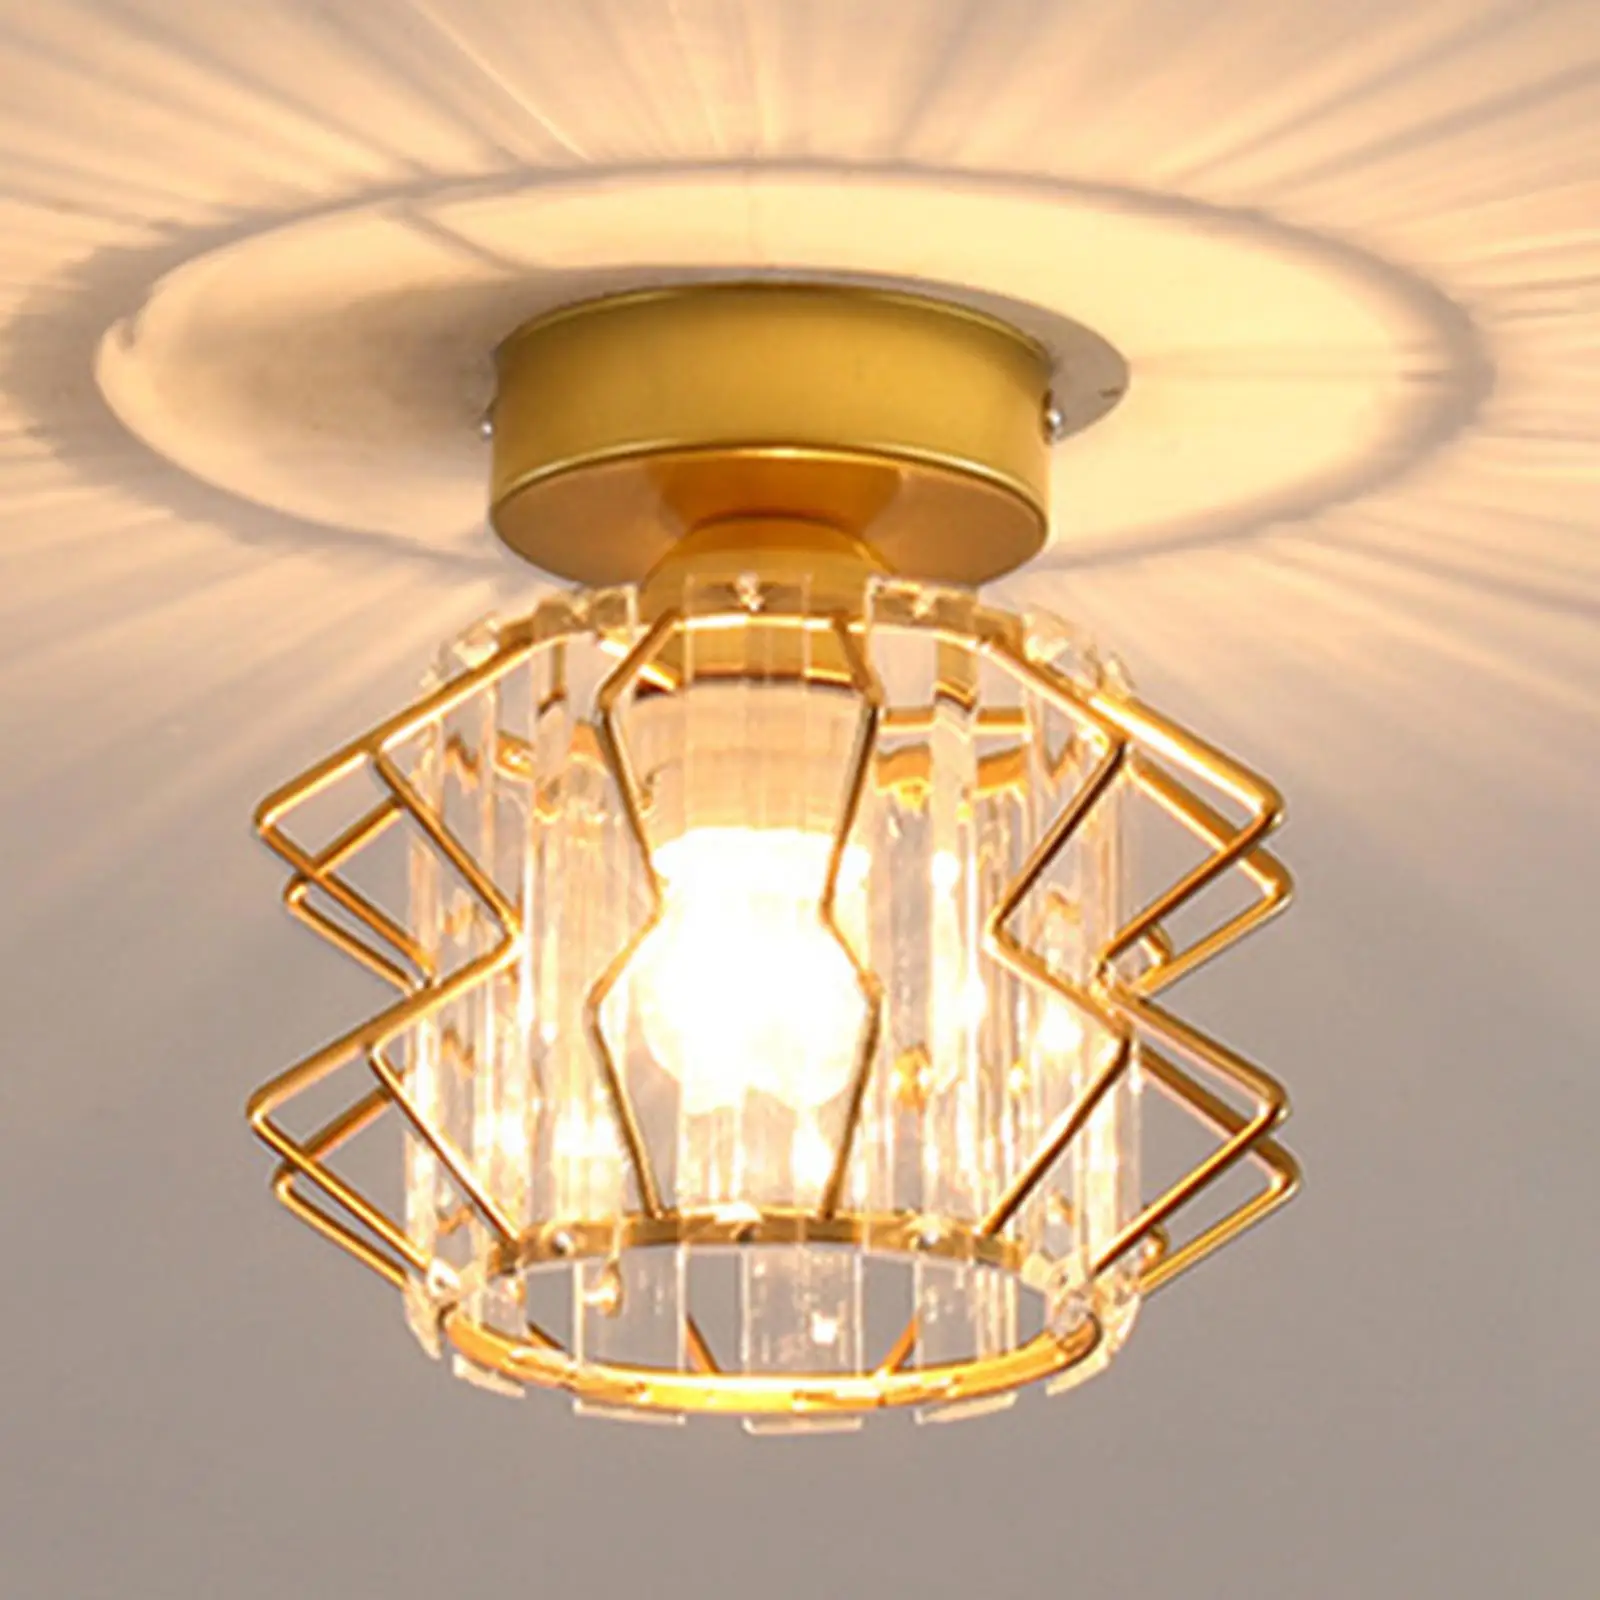 Antique LED Ceiling Light E27 Lamp Flush Mount for Stairway Bedroom Kitchen Dining Room